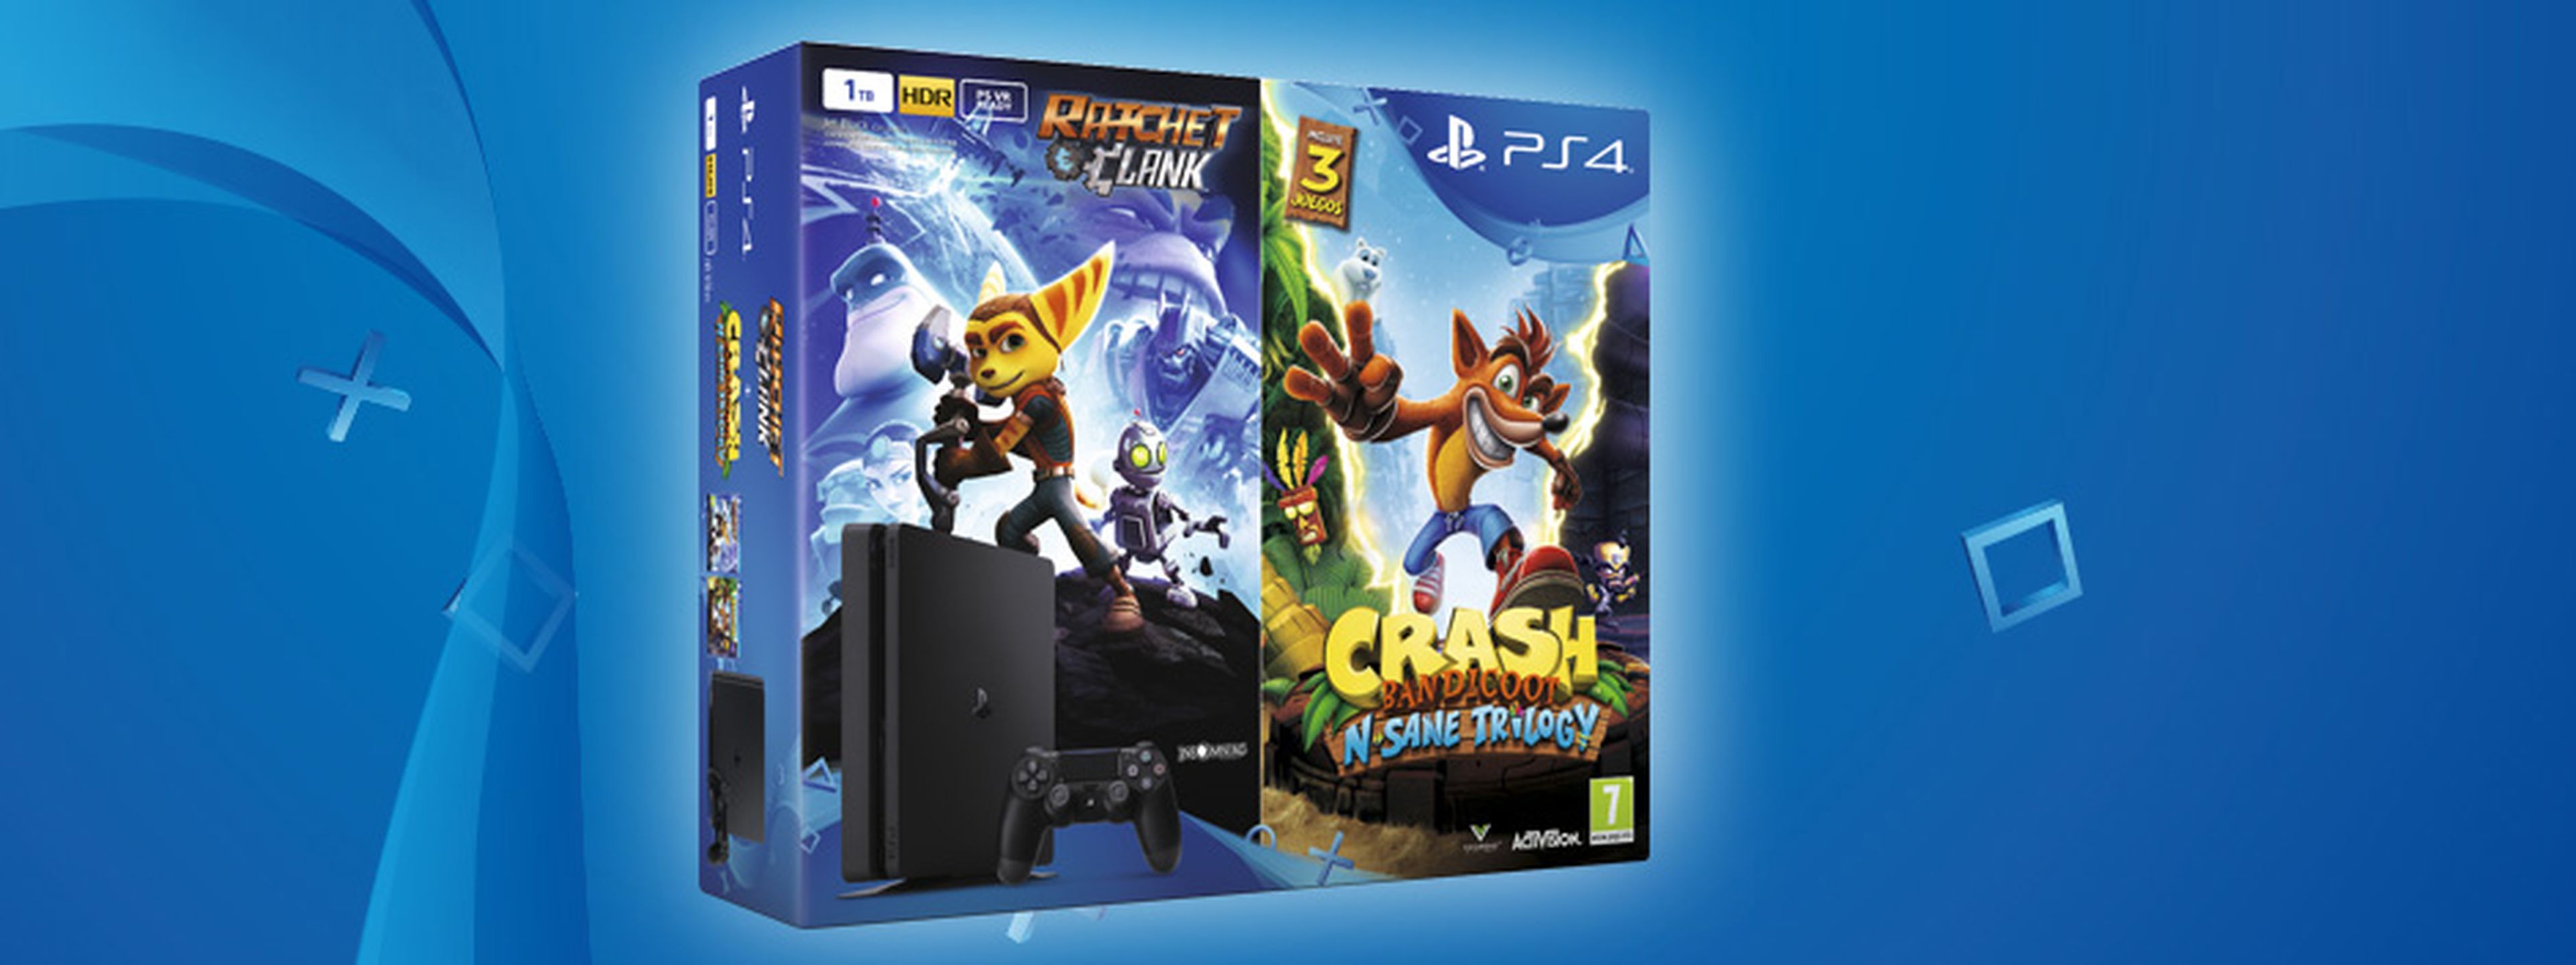 PS4 pack con Crash Bandicoot y Ratchet & Clank